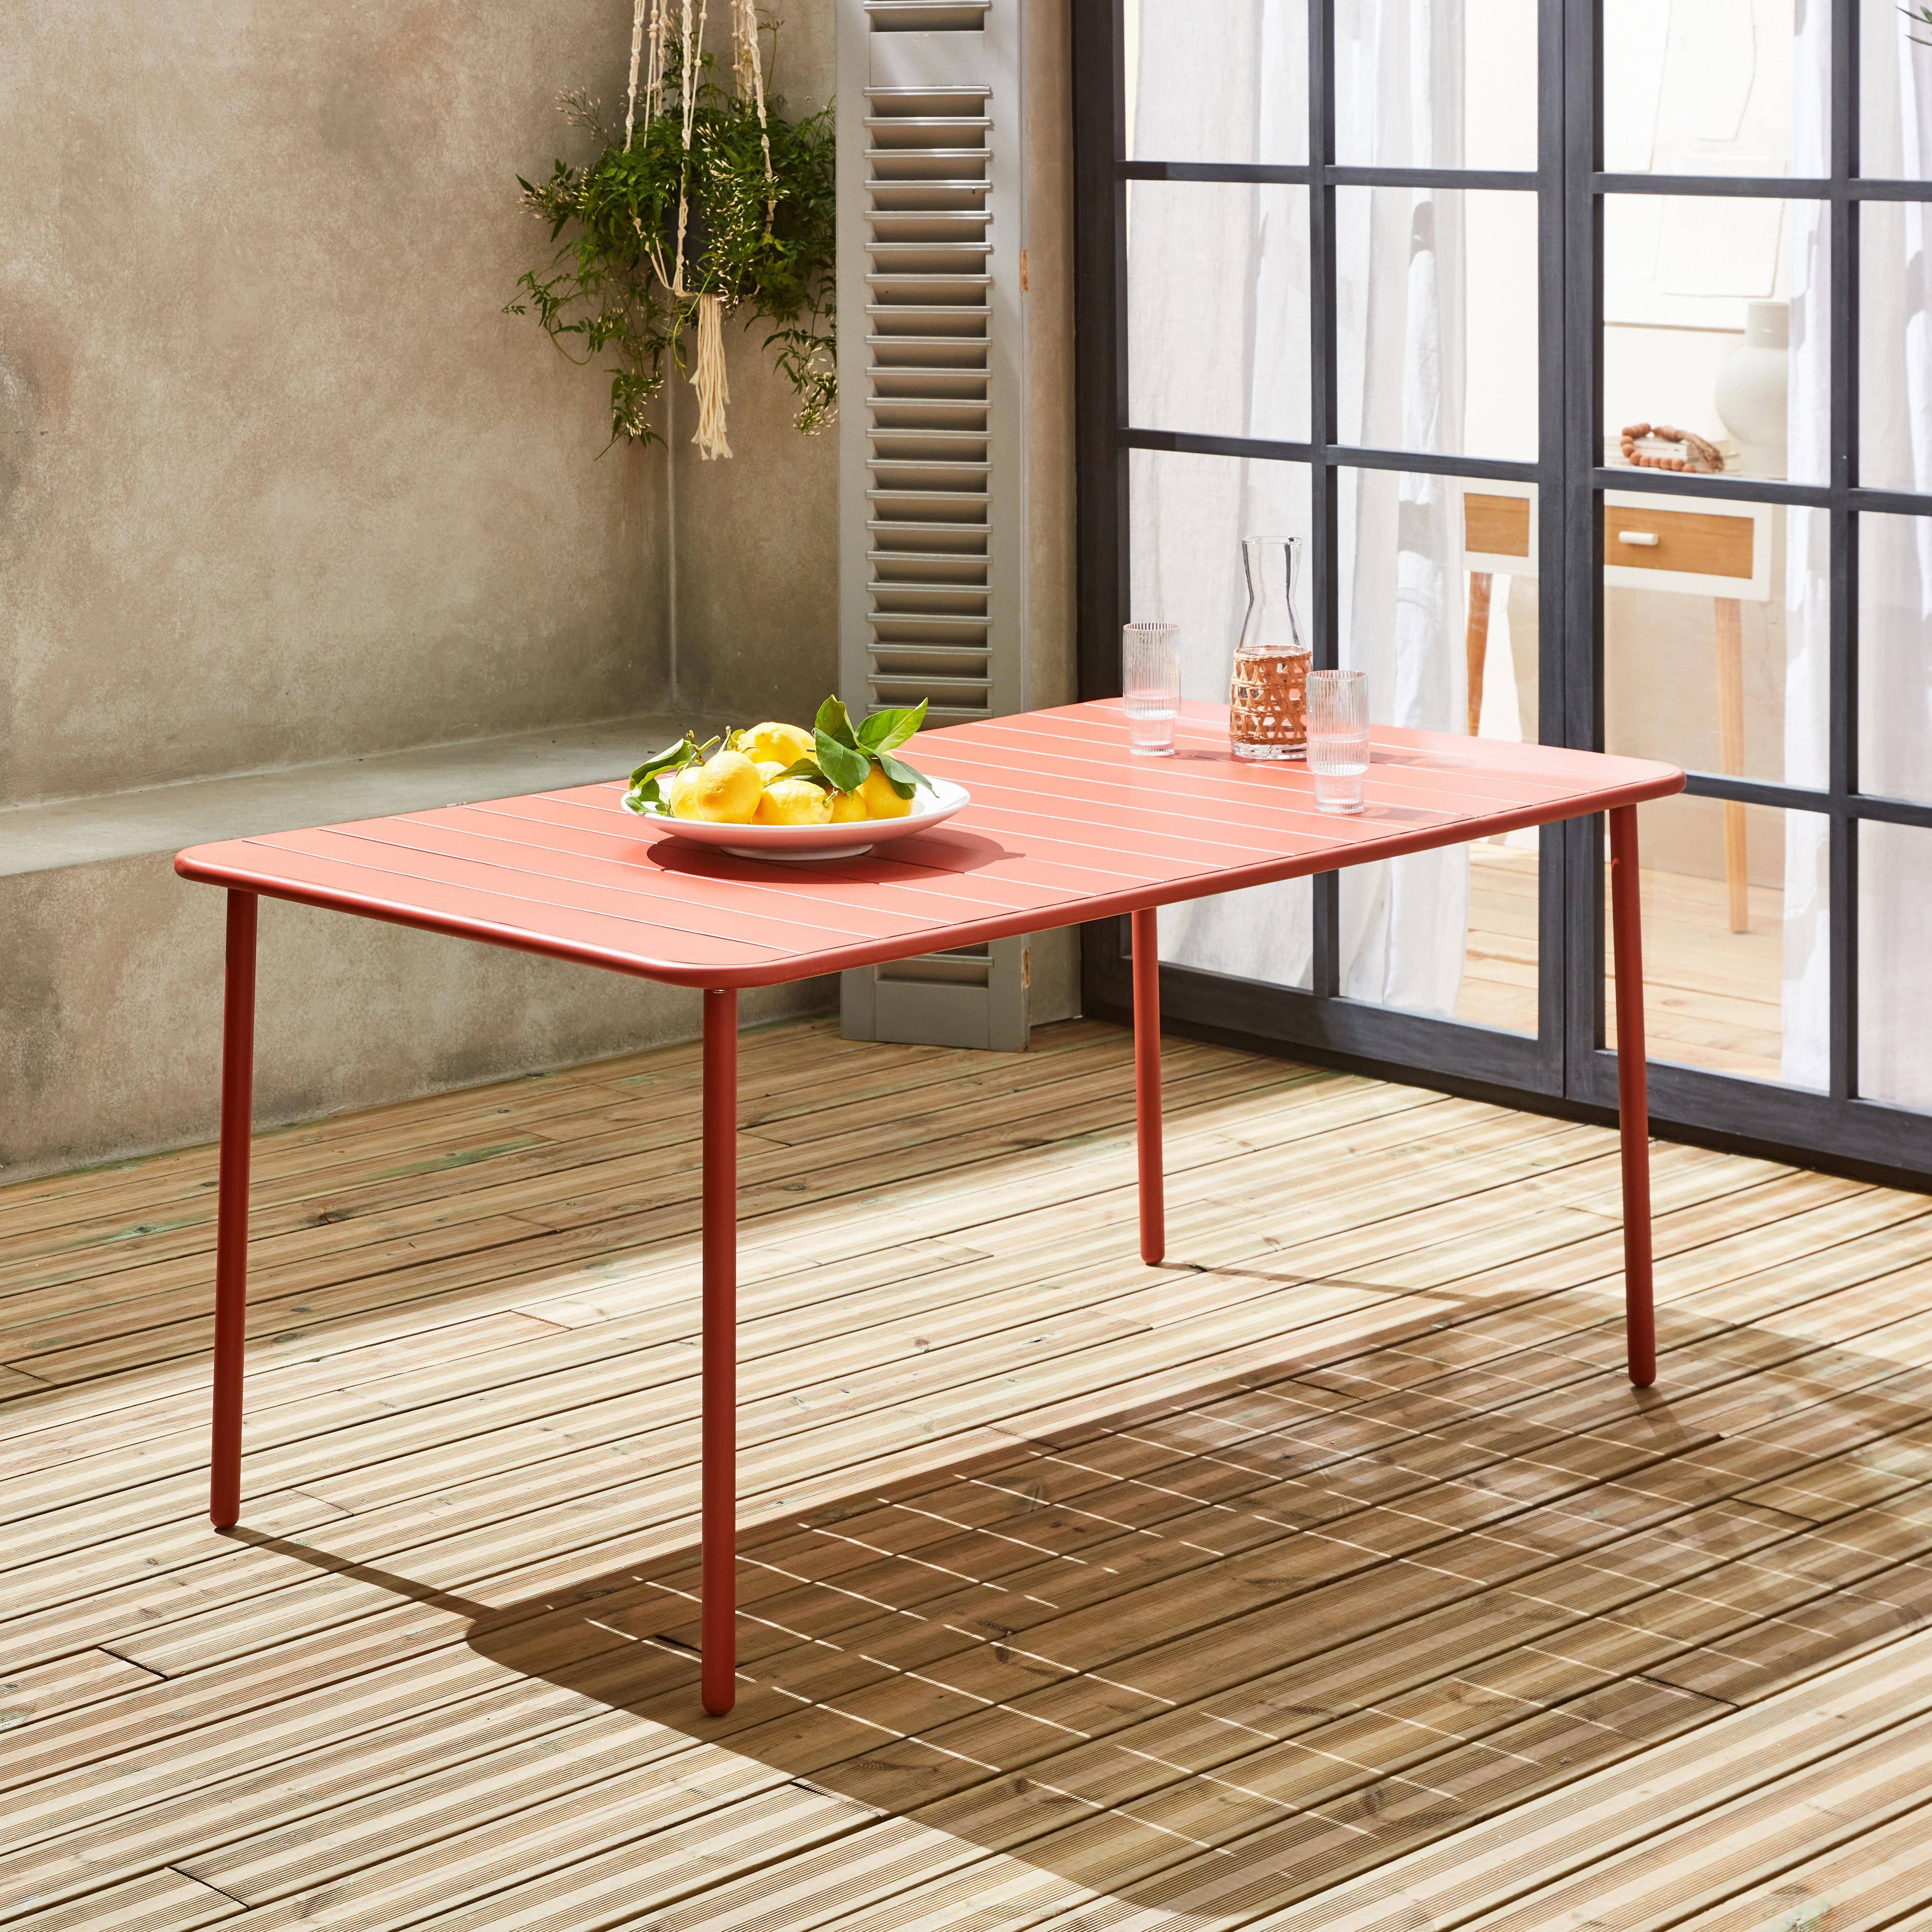 6-8 Seater metal garden table, 160x90xH72.5cm, Terracotta Photo2